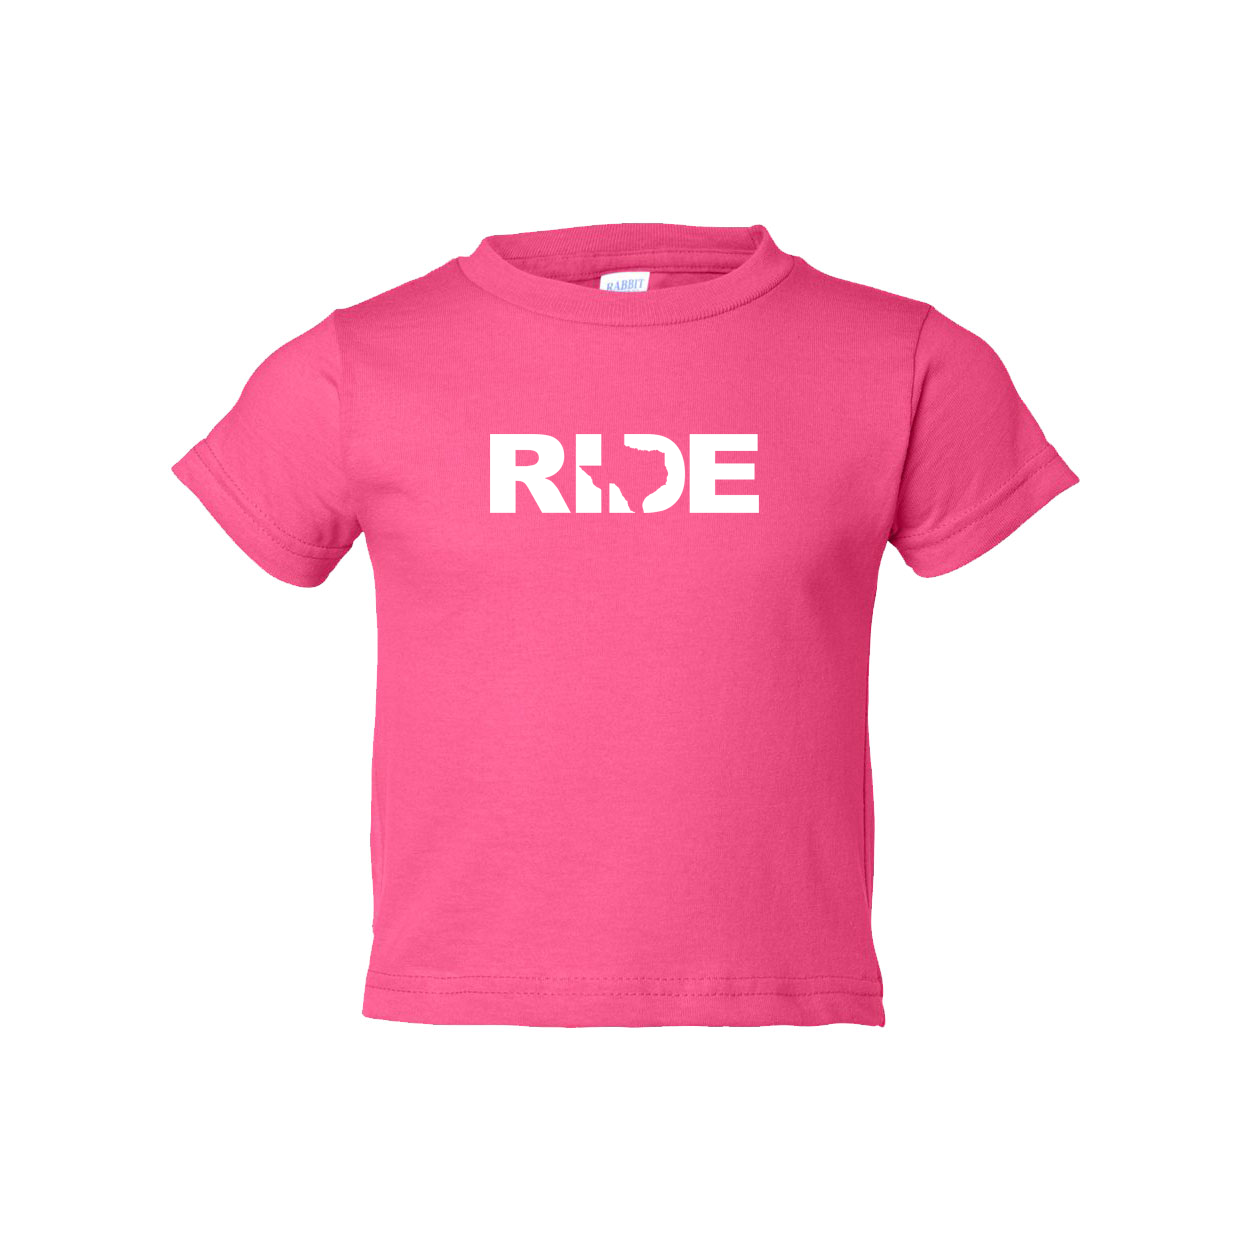 Ride Texas Classic Toddler T-Shirt Pink